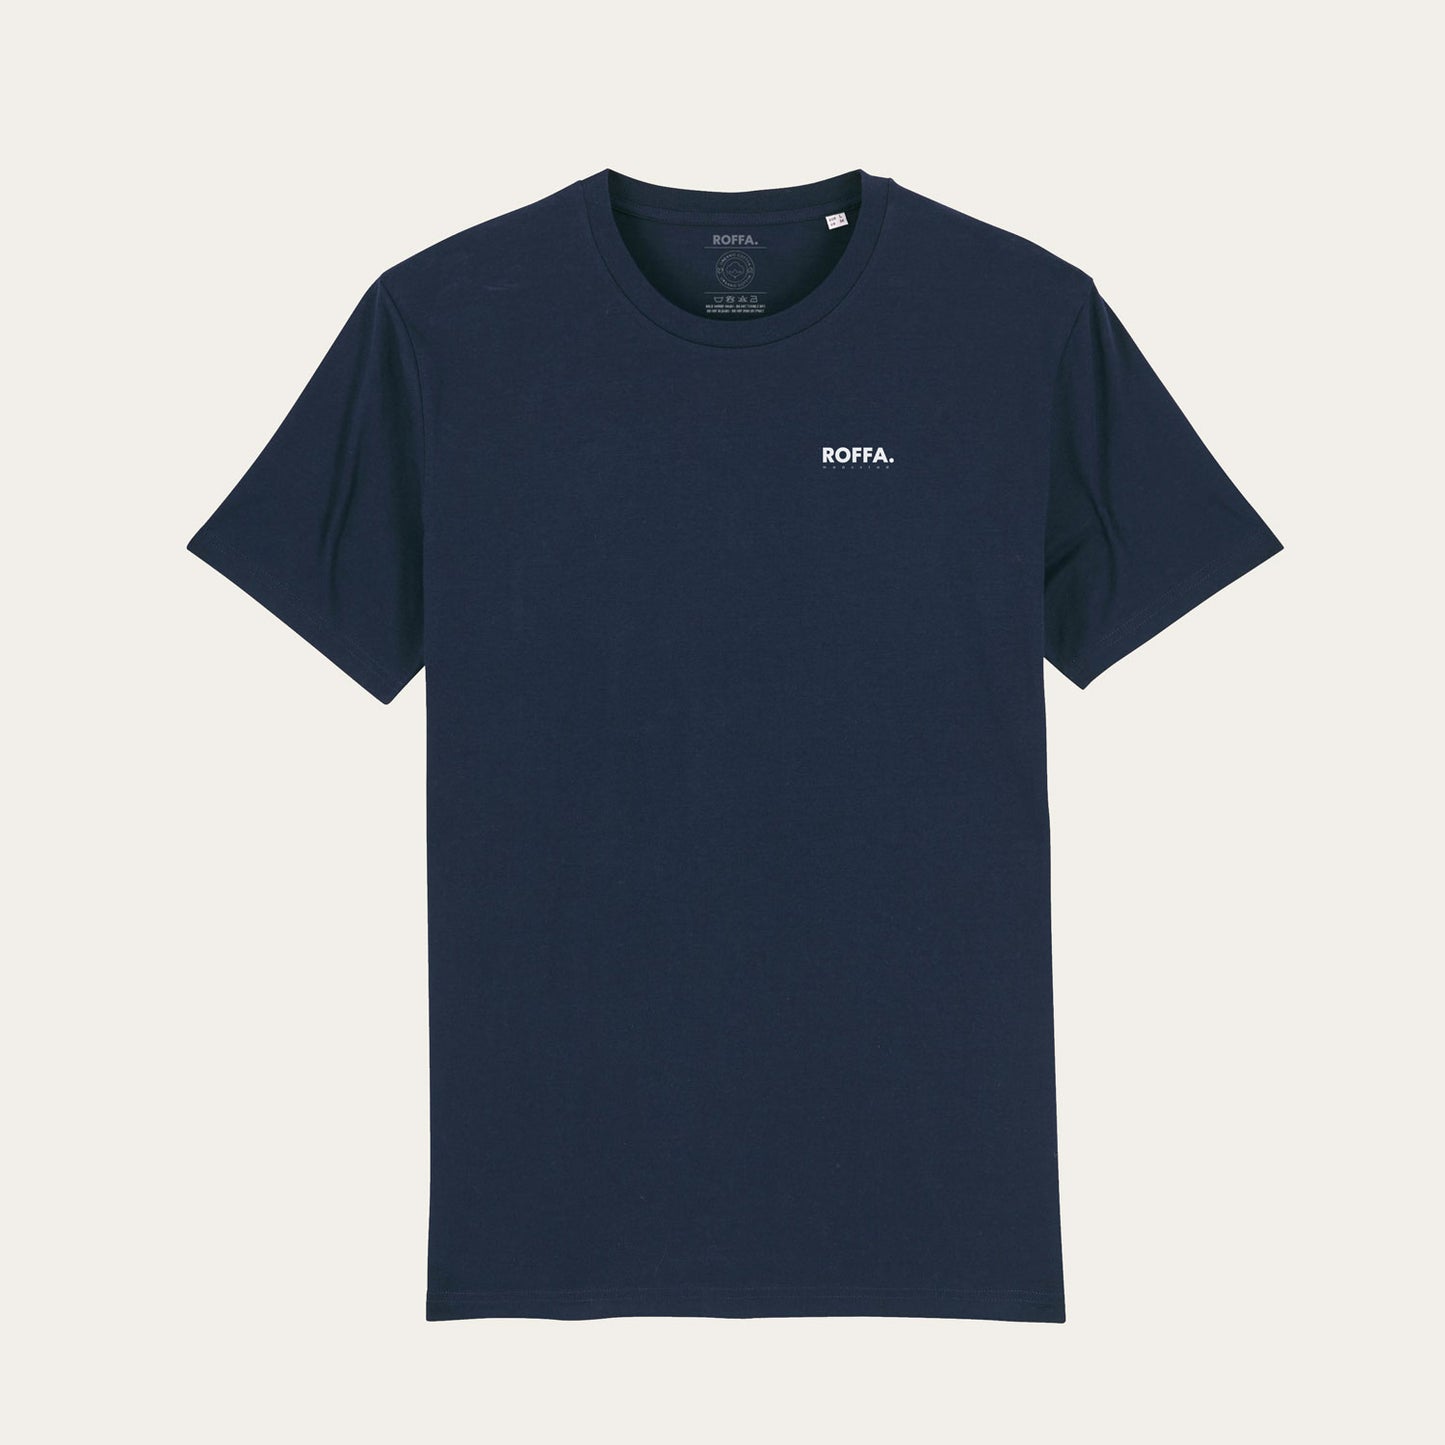 Blauw t-shirt met Roffa en rotterdam logo